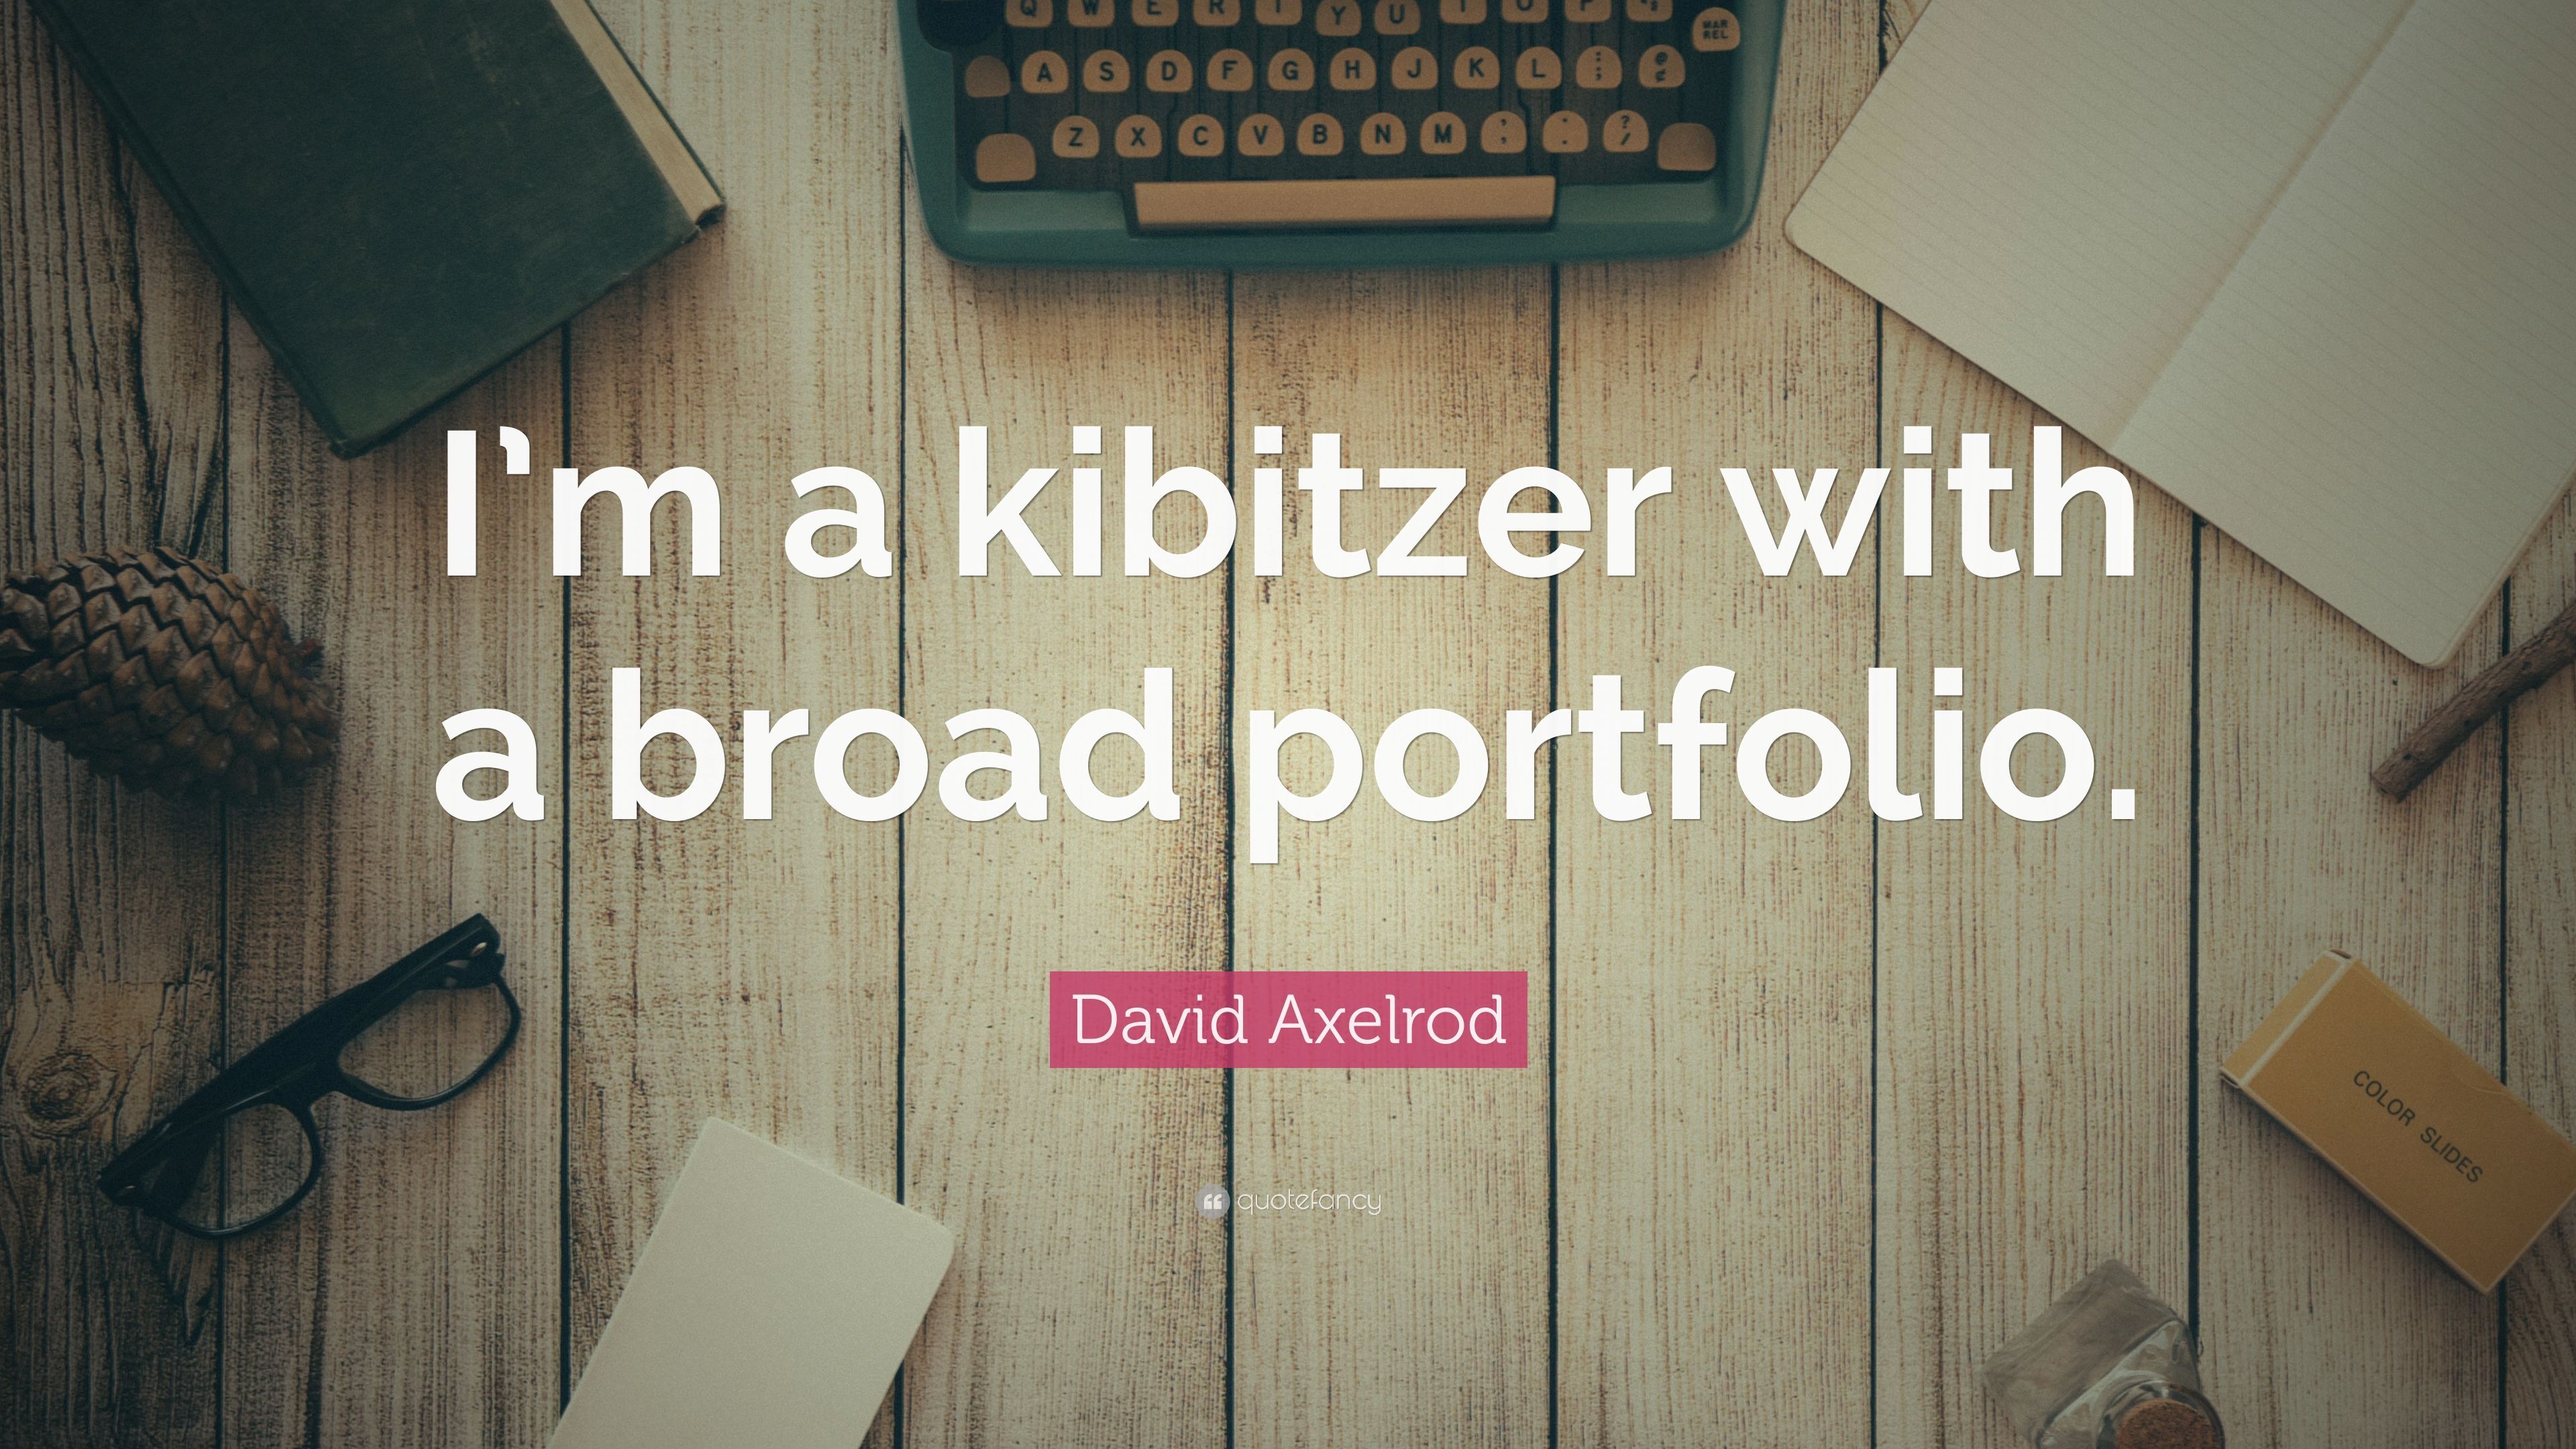 David Axelrod Quote: "I'm a kibitzer with a broad portfolio. 